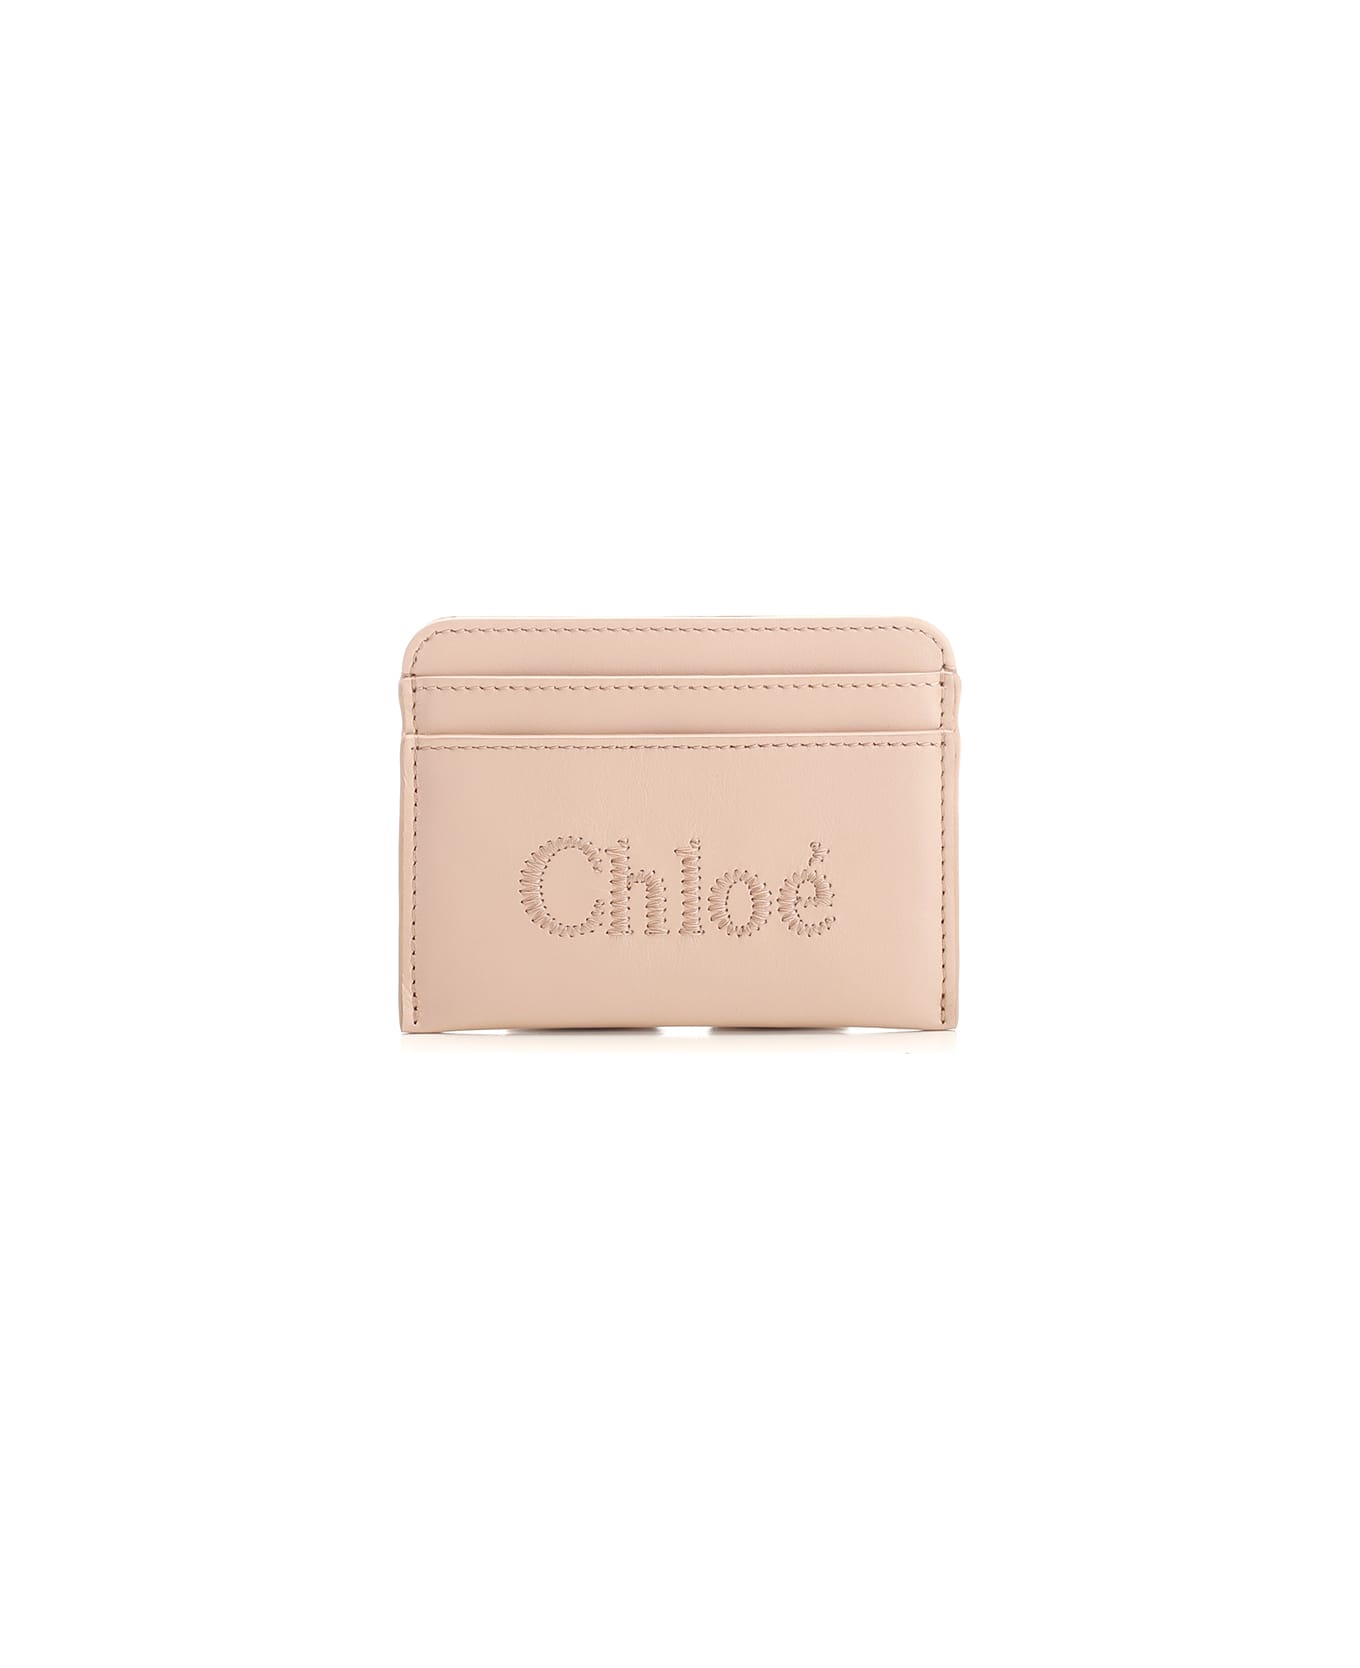 Chloé Leather Card Case - Powder